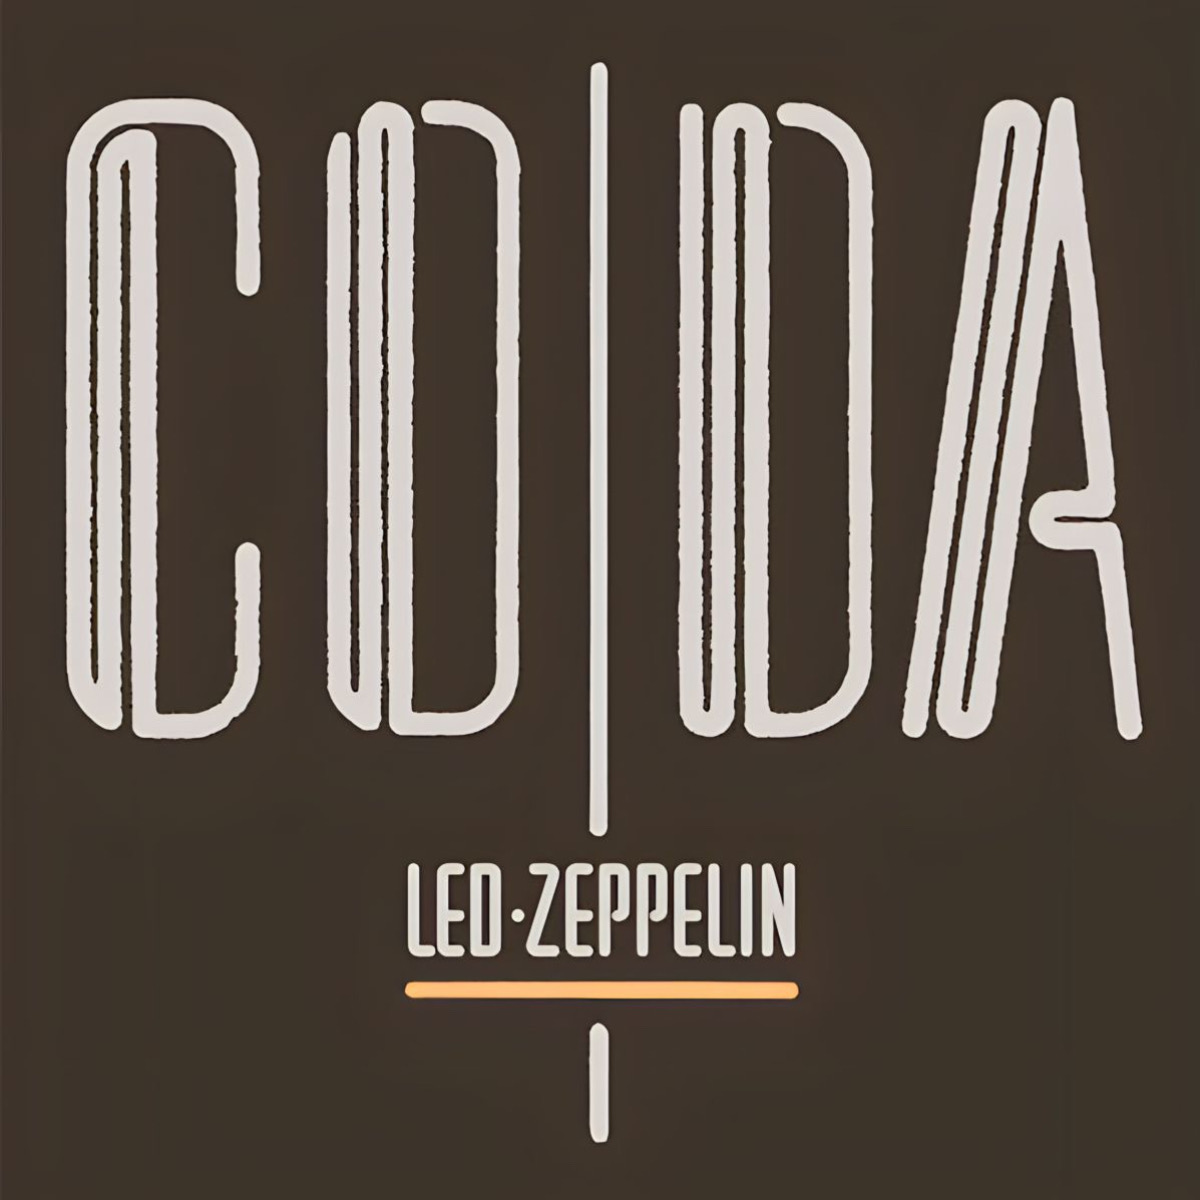 The album "Coda" by Led Zeppelin.